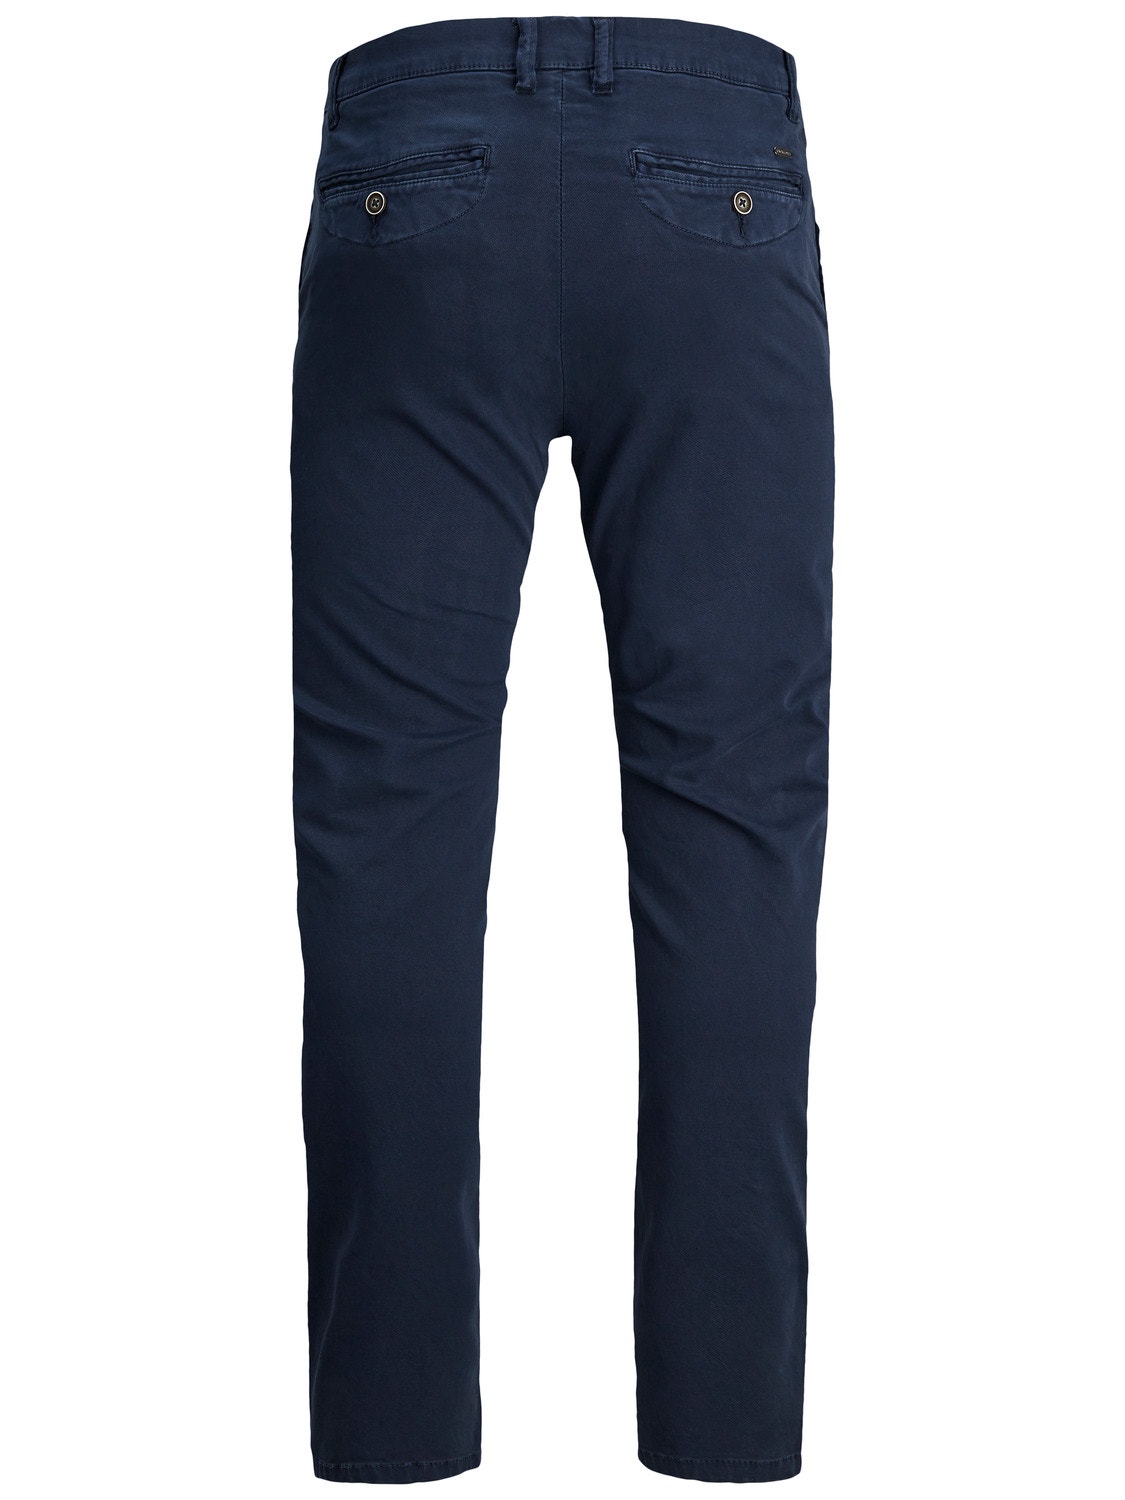 Jack & Jones Slim Fit Spodnie chino -Navy Blazer - 12254931